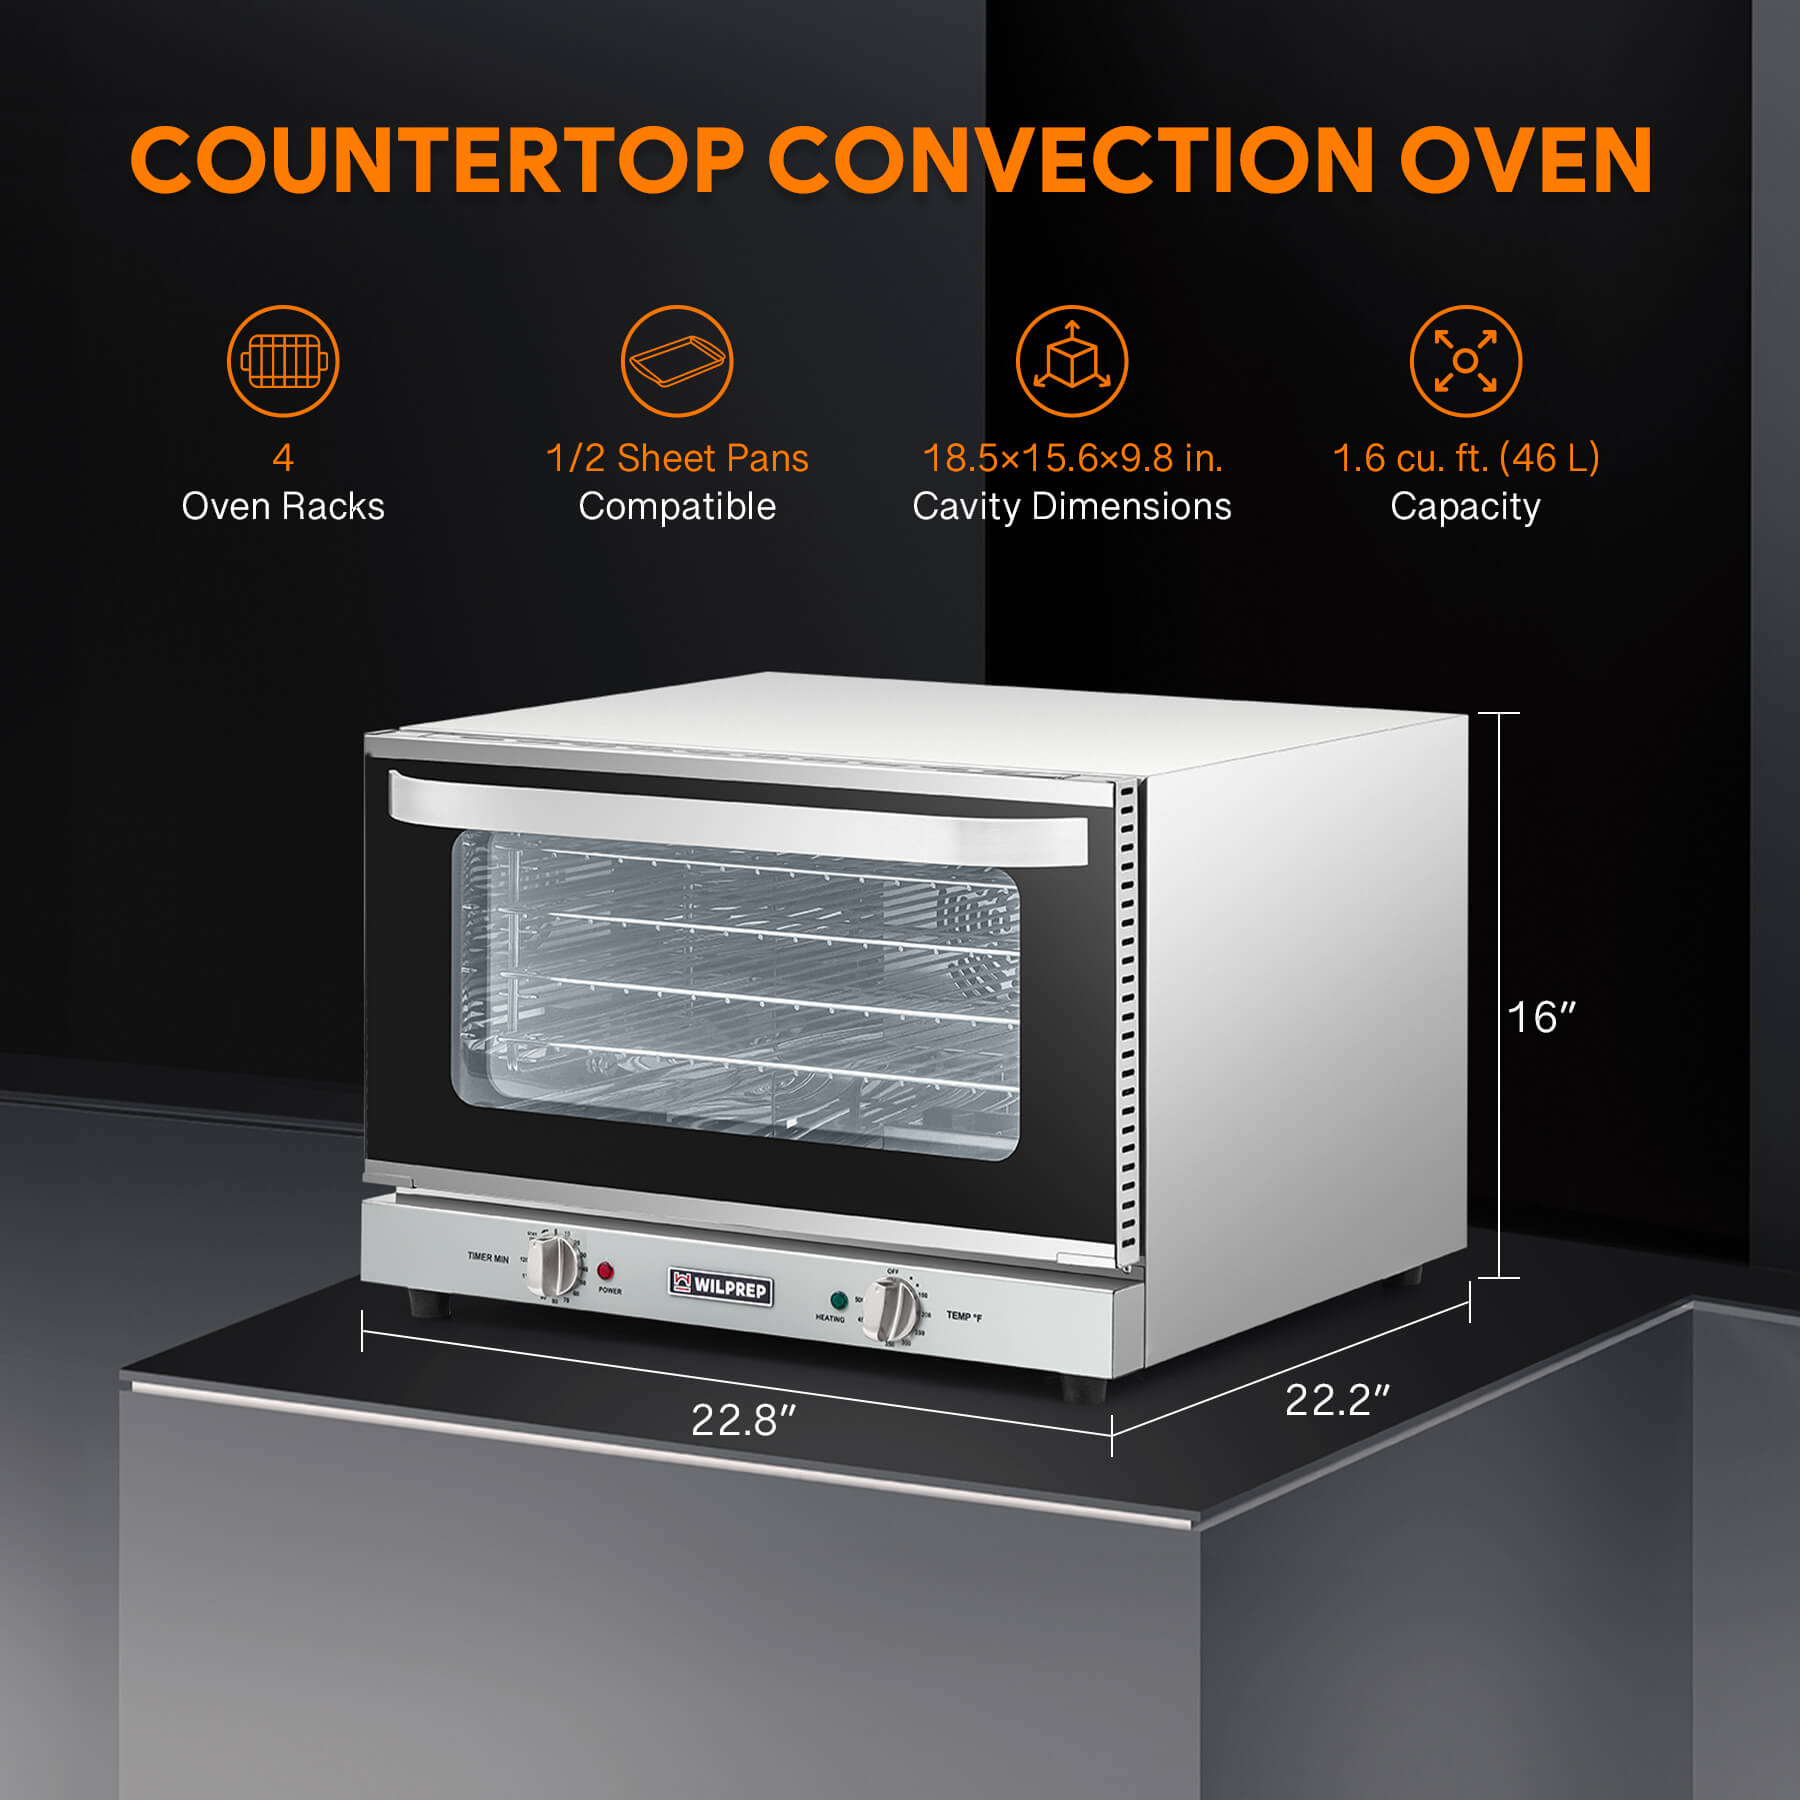 WILPREP 1/2 Pan Countertop Convection Oven 1.6 cu. ft. 1600W